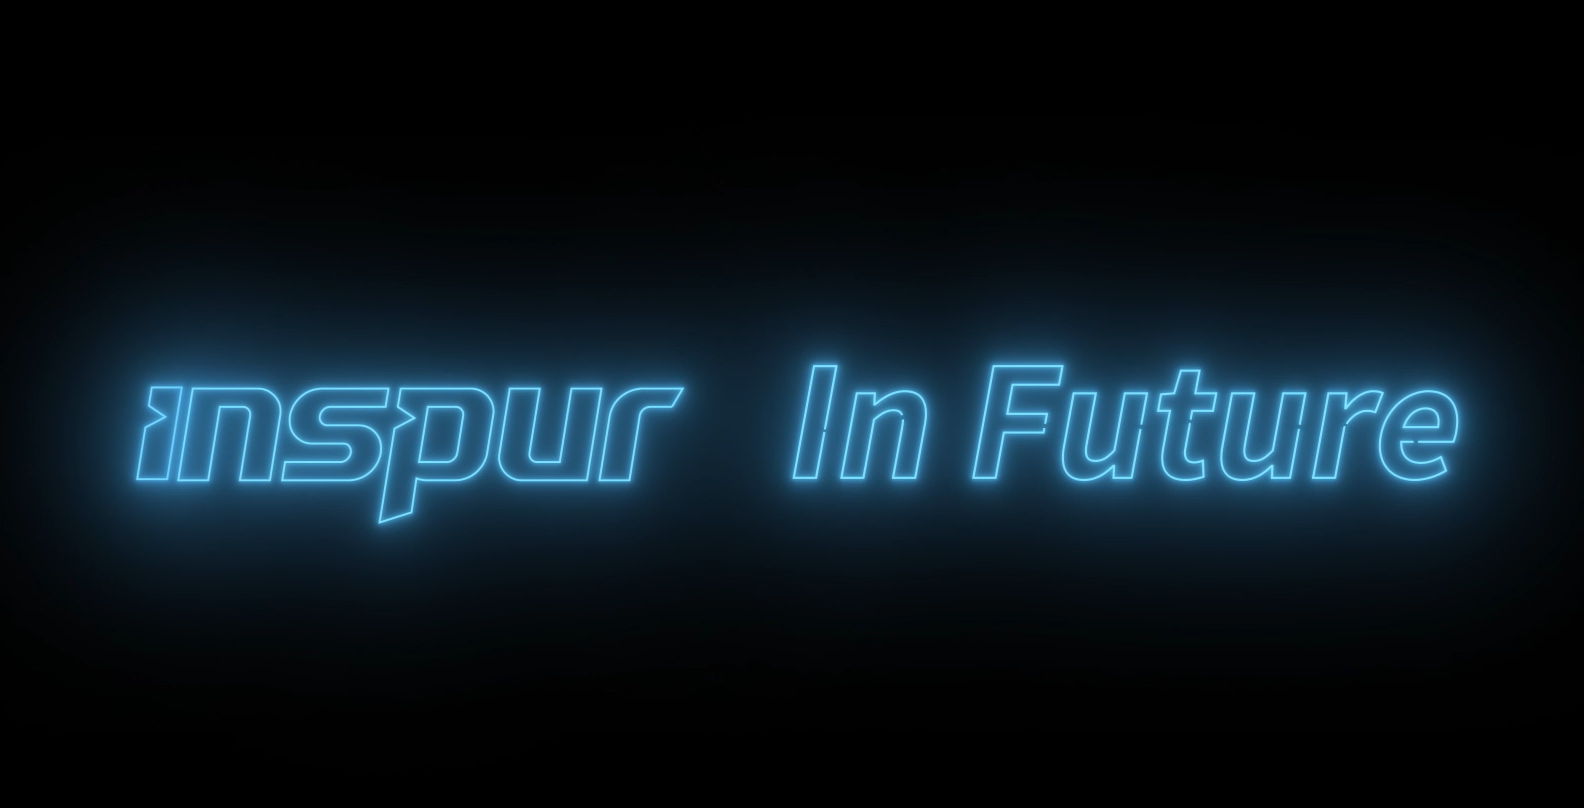 Inspur in Future | 米乐m6
2020形象宣传片